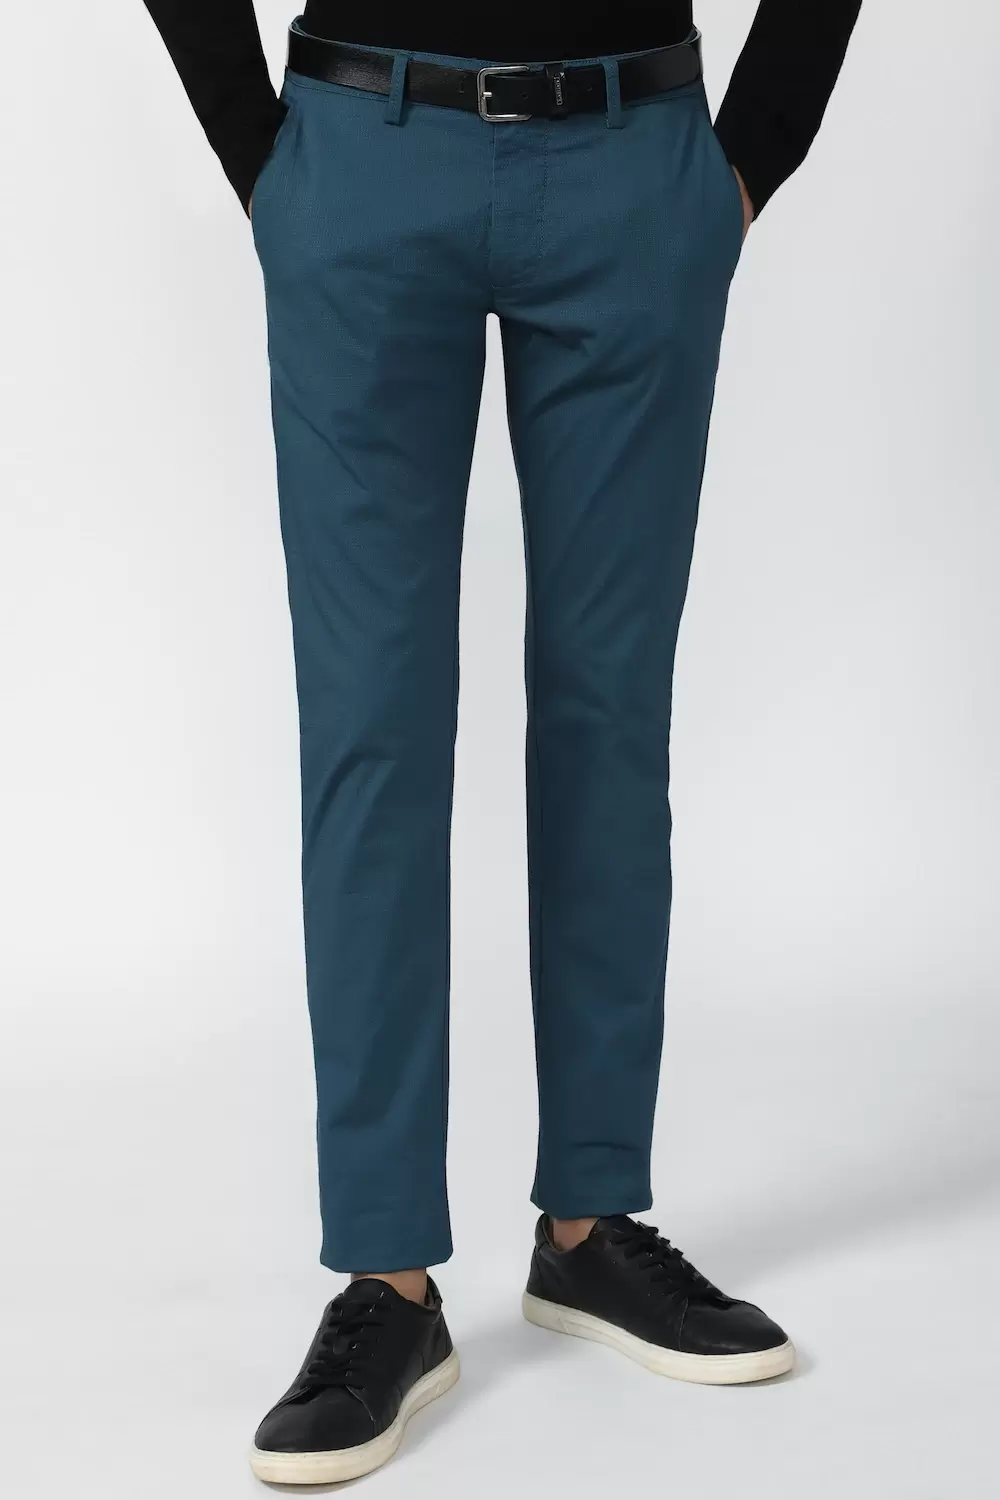 Buy Peter England Men Navy Solid Slim Fit Formal Trousers Online